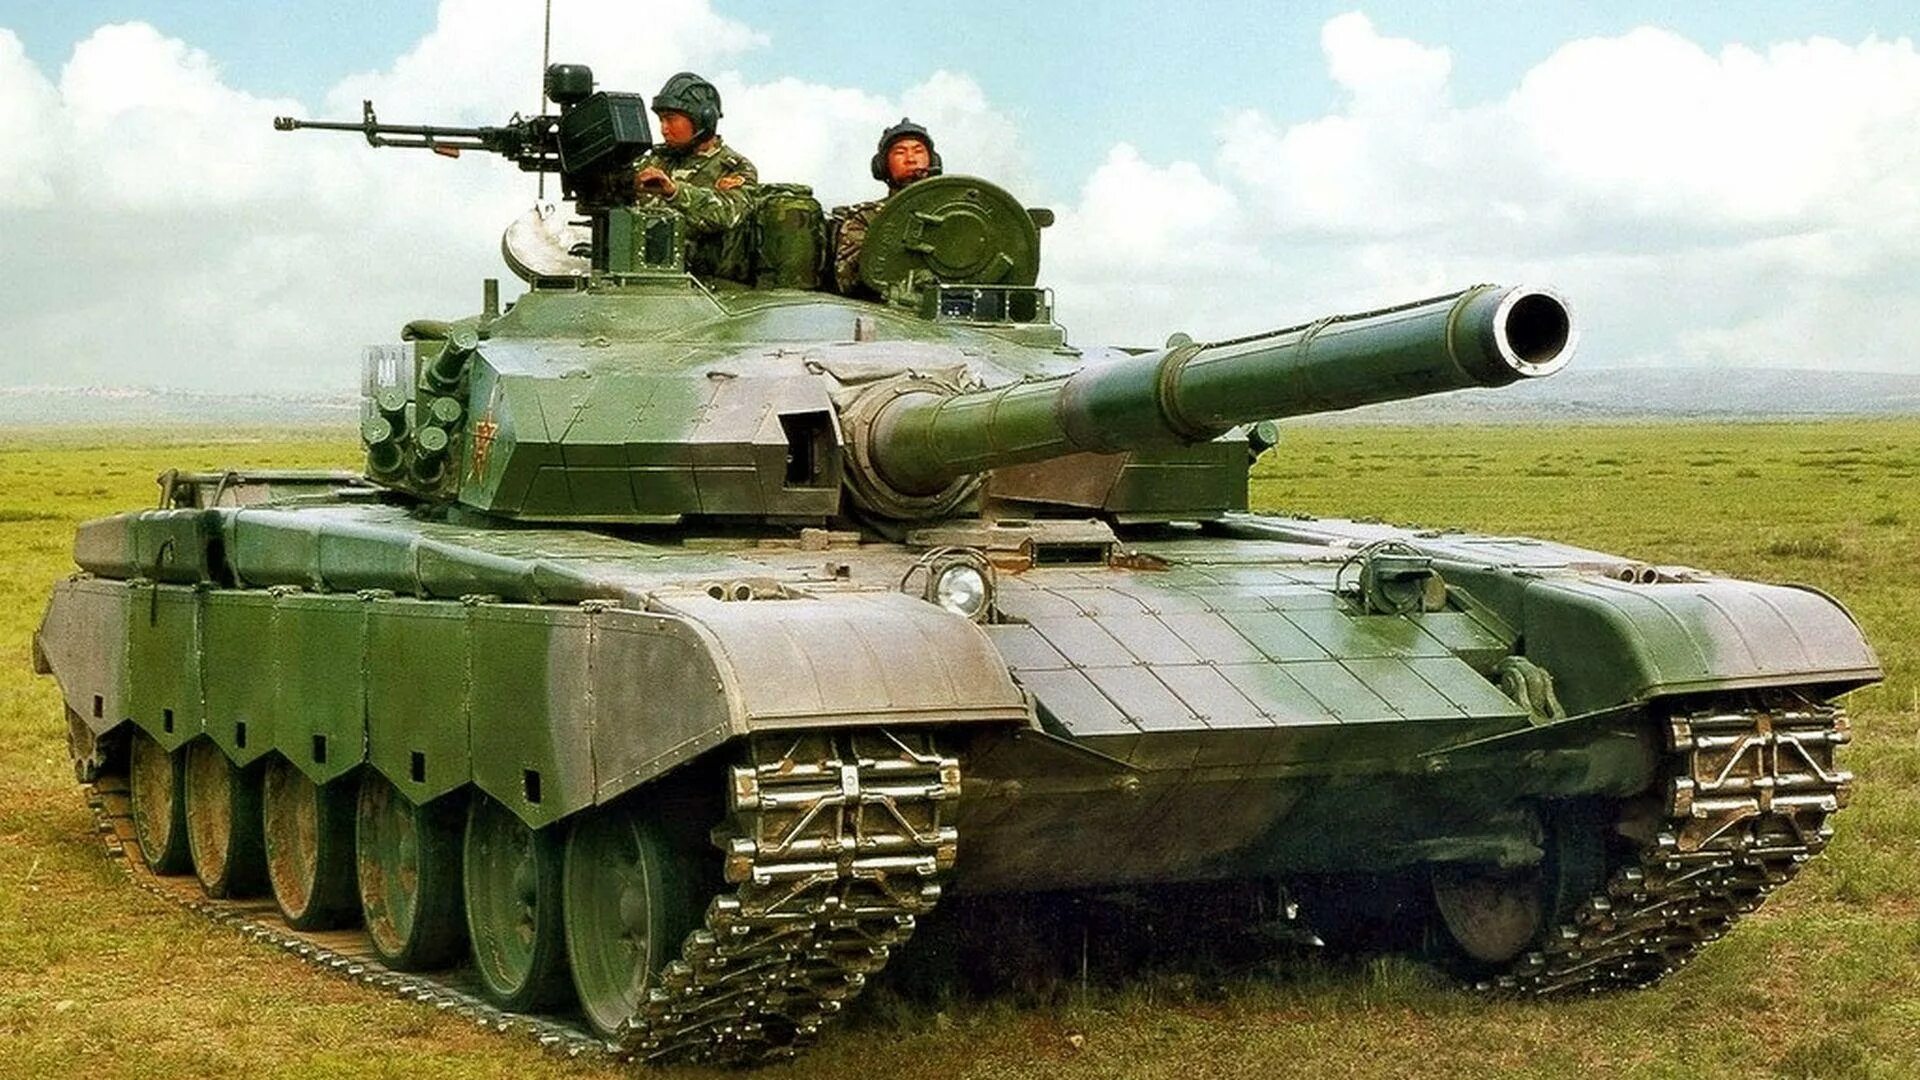 Type 99 танк. Китайский танк тайп 99. Танк ZTZ-99a. Type 99 MBT. Ztz 99